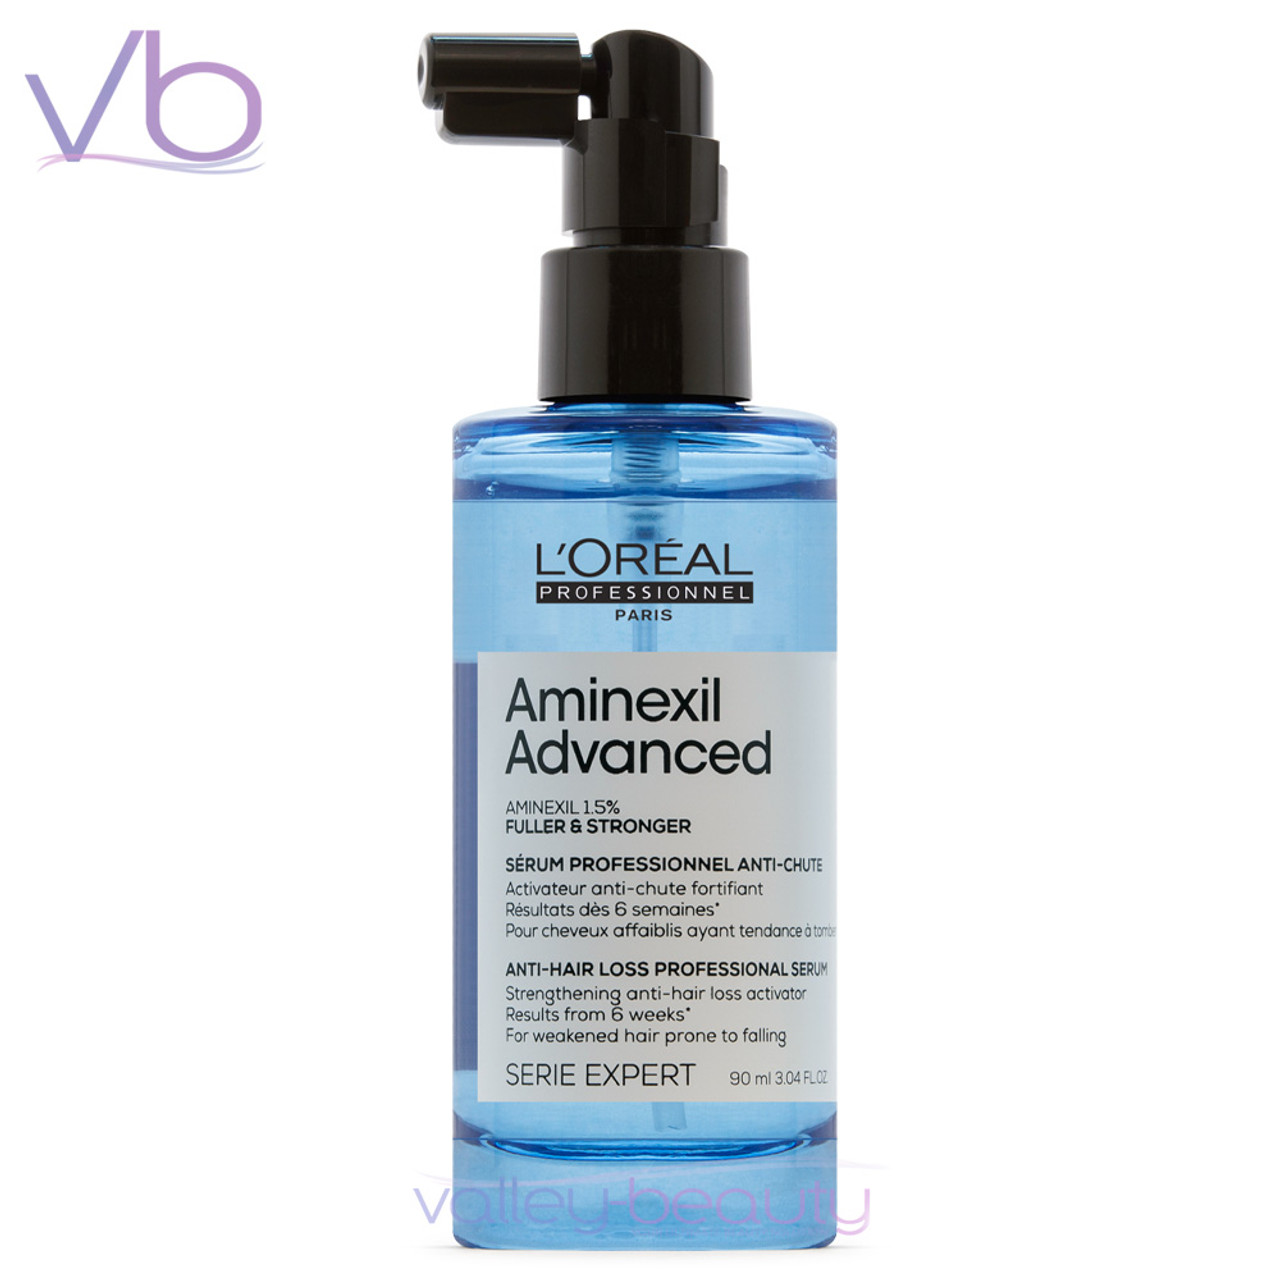 L'Oreal L’Oreal Aminexil Advanced Serum | Anti-Hair Loss Treatment for Men and Women, 90ml